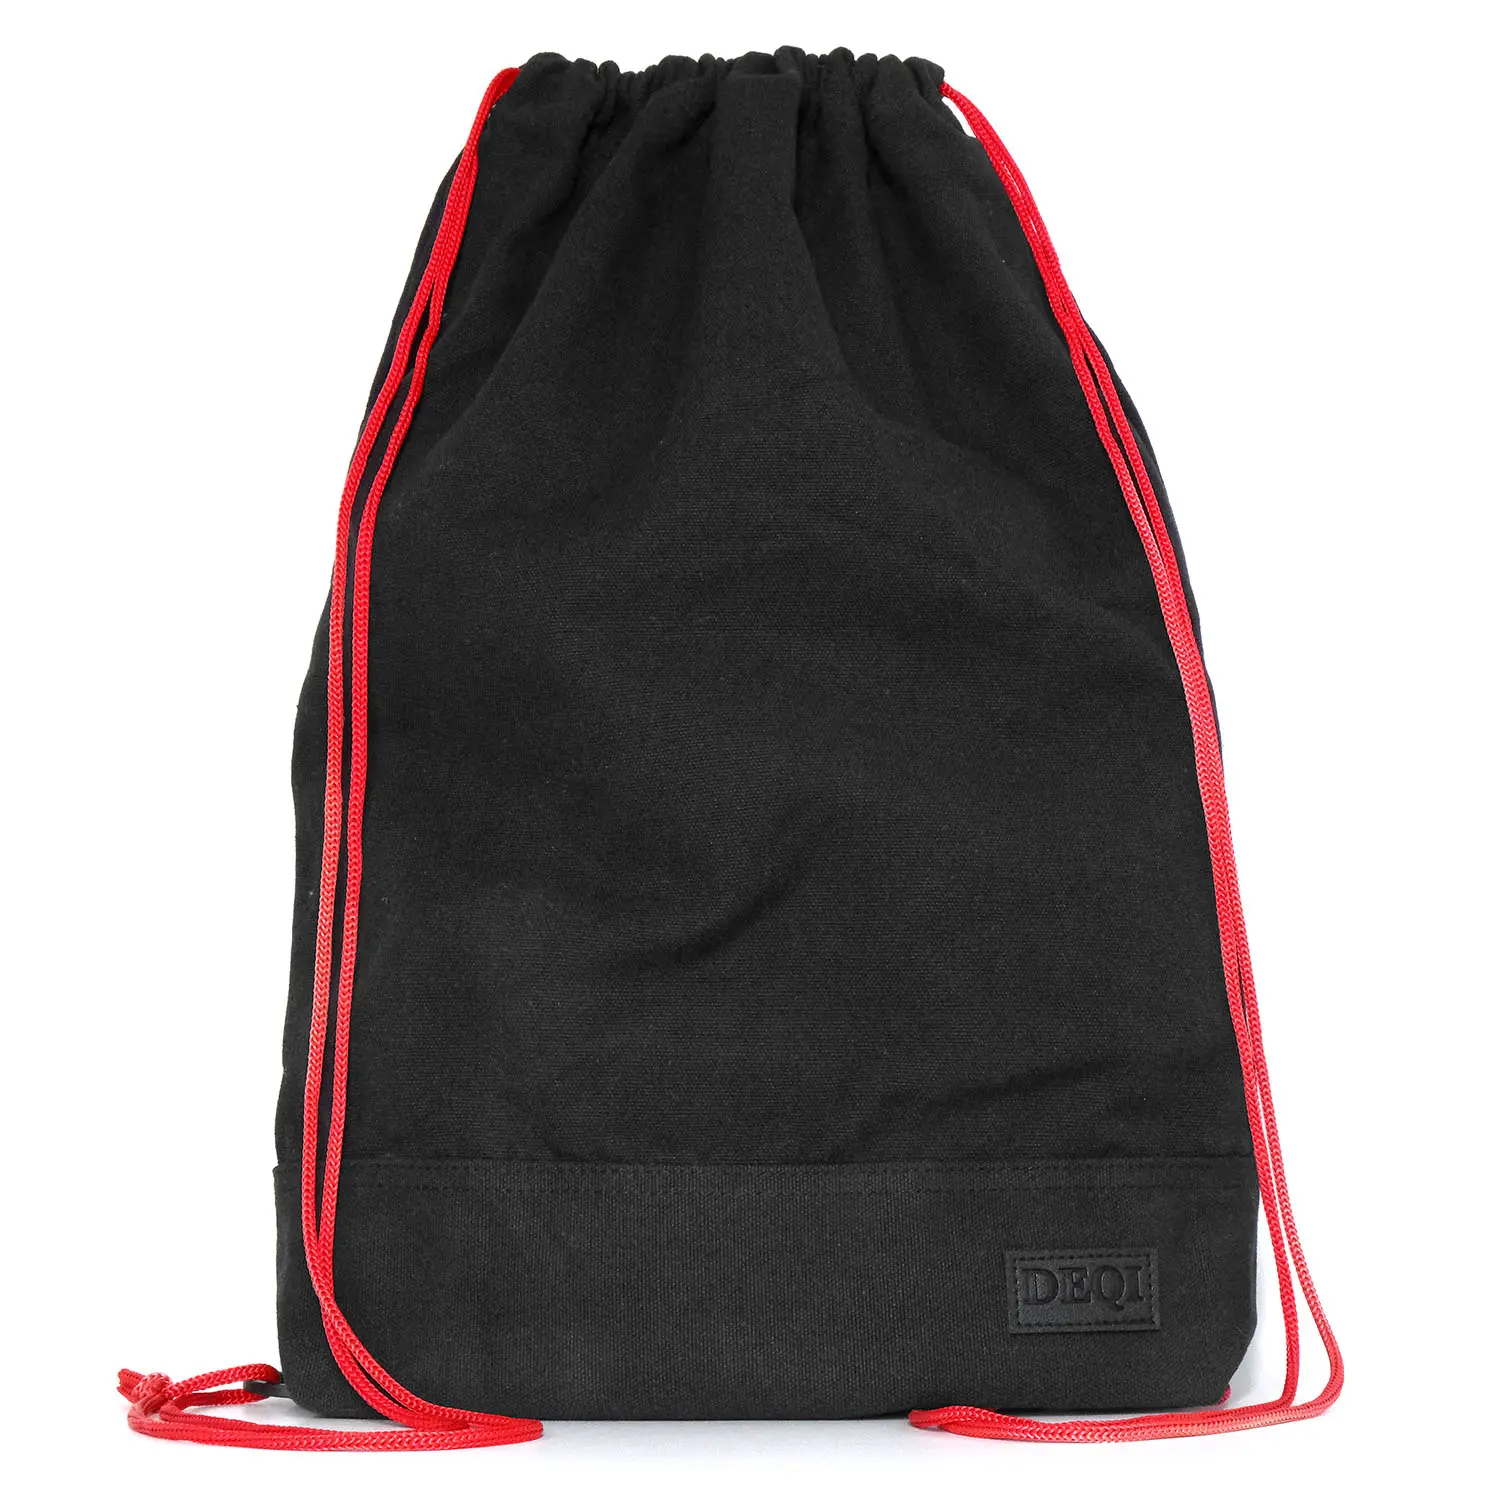 DEQI Haversacks Eco Friendly 100% Recycled Organic Cotton Drawstring Bag Outdoor Sports Natural Canvas Drawstring Backpack